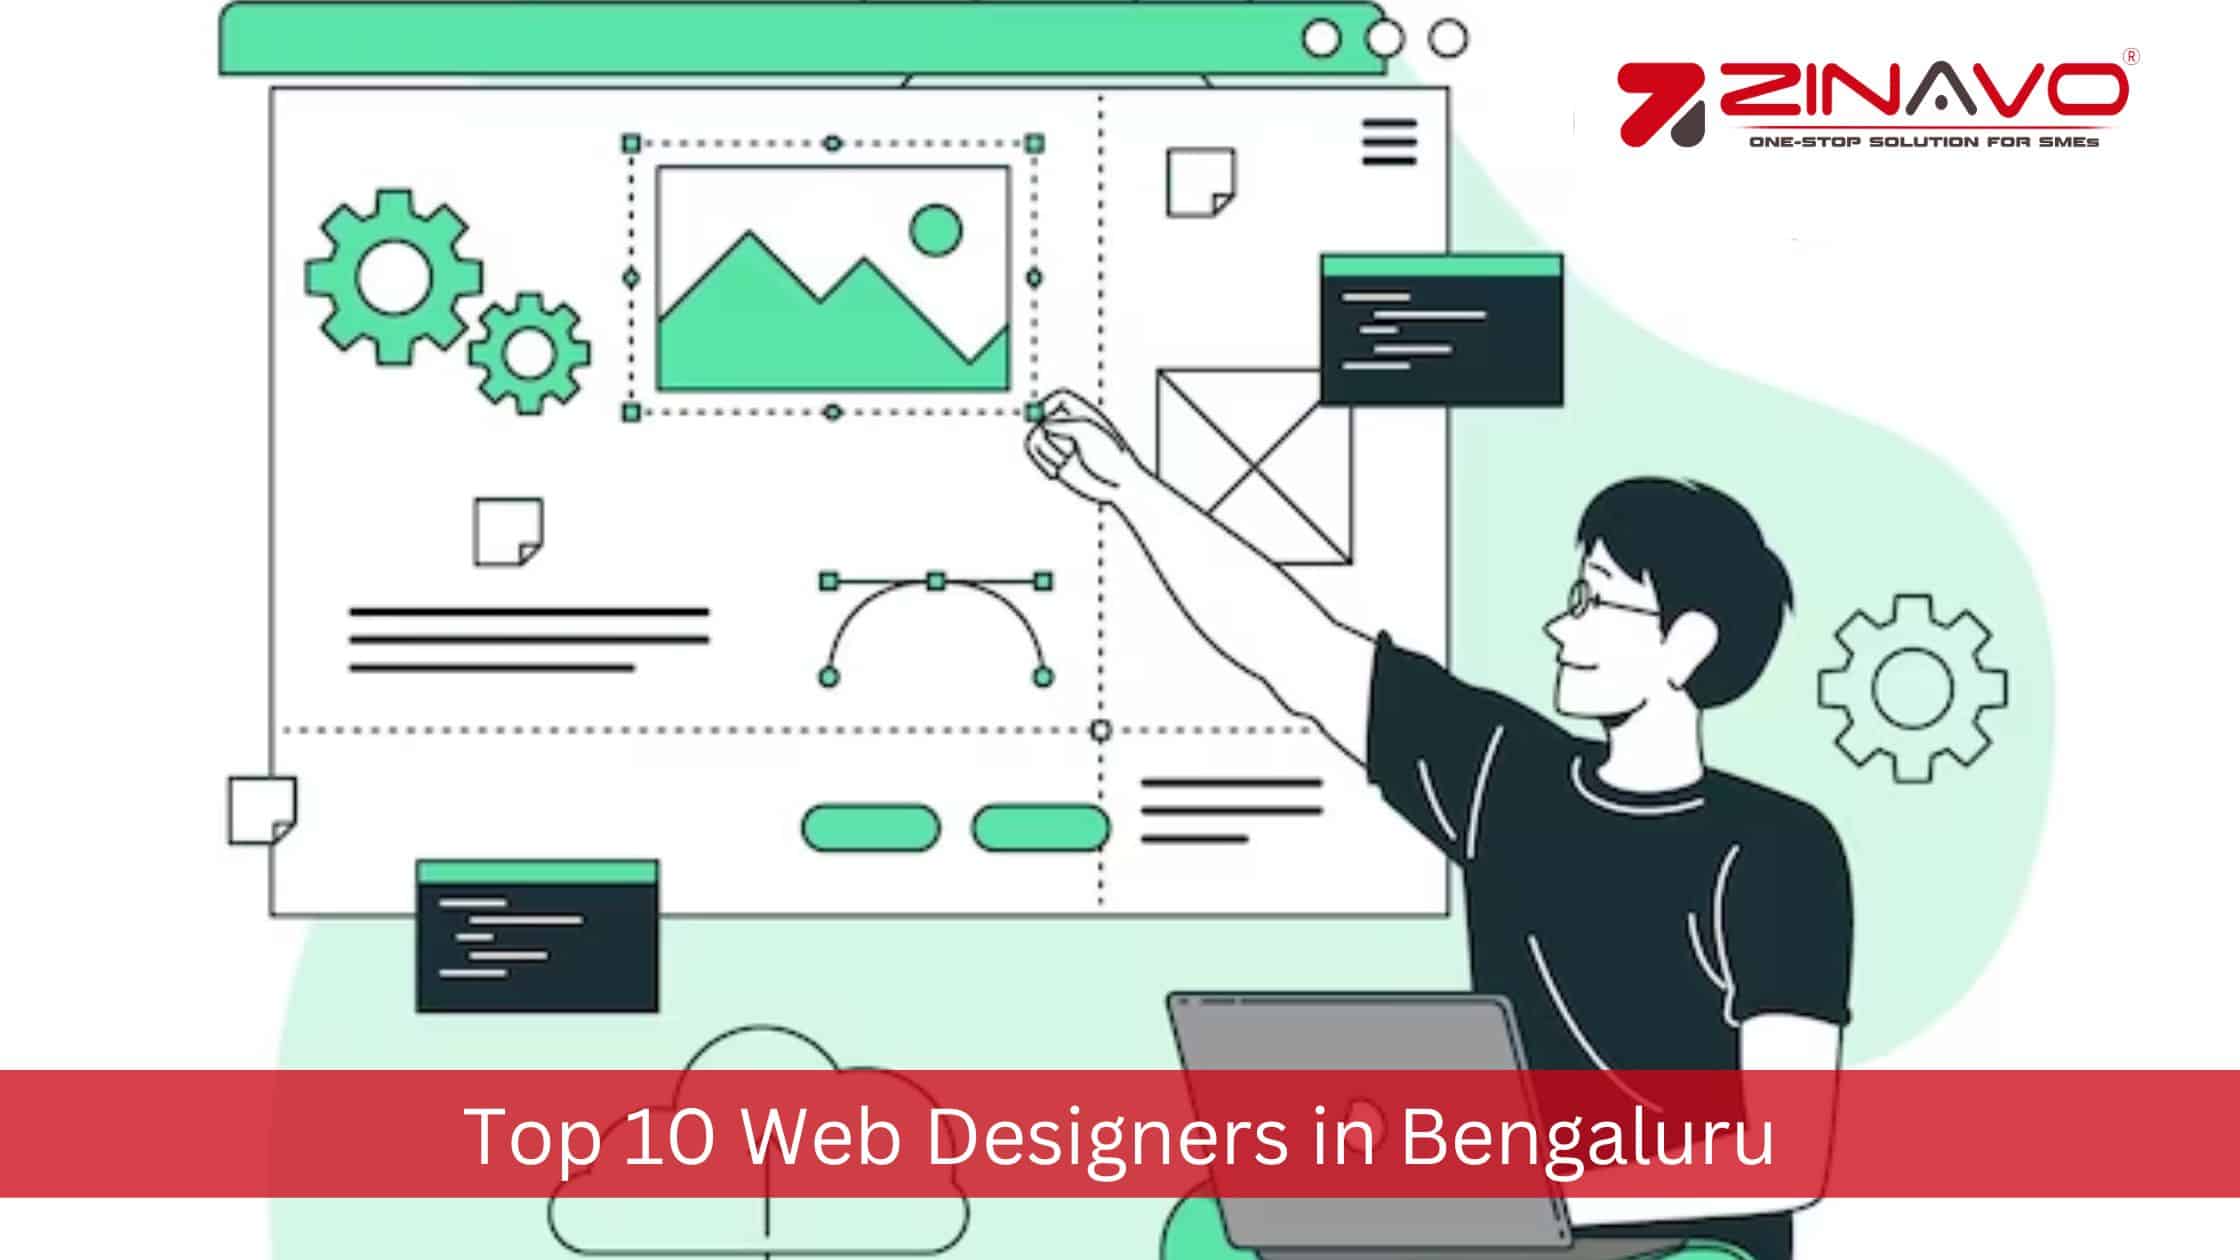 Top 10 Web Designers in Bengaluru